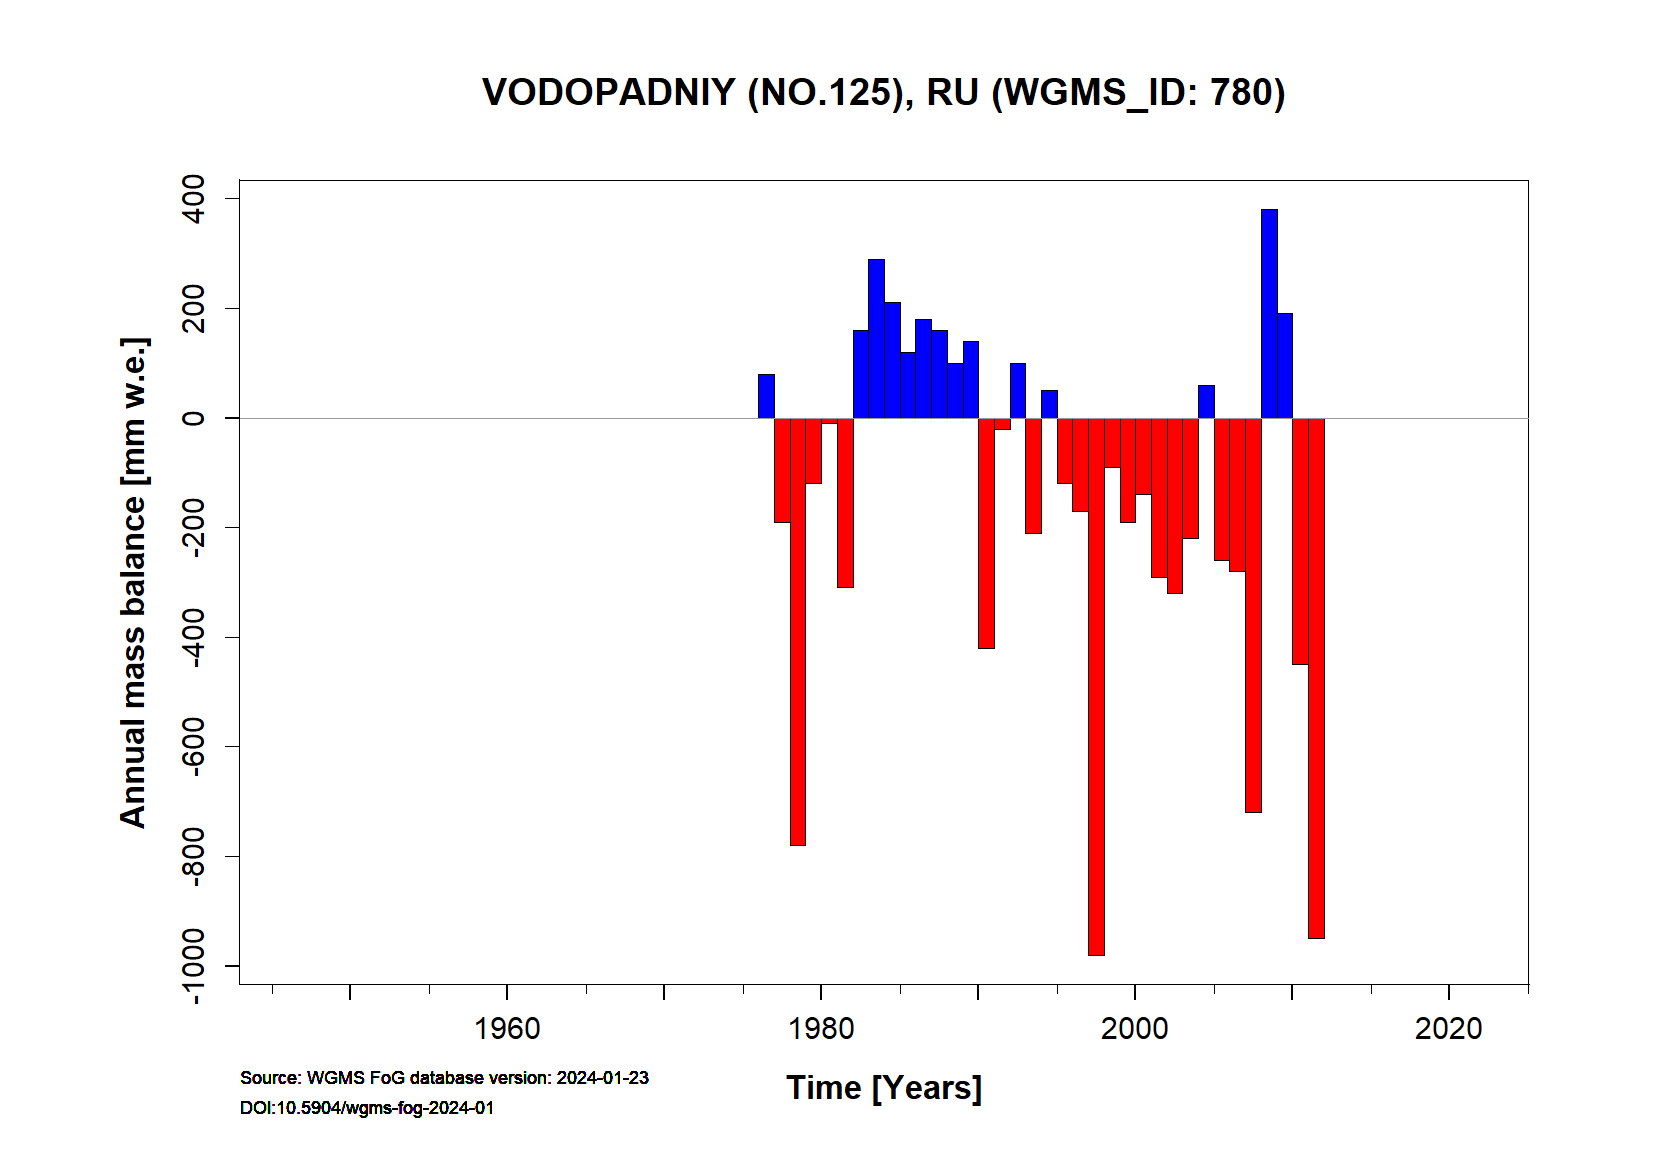 Vovopadniy (No. 125) glacier Annual Mass Balance (WGMS, 2016)